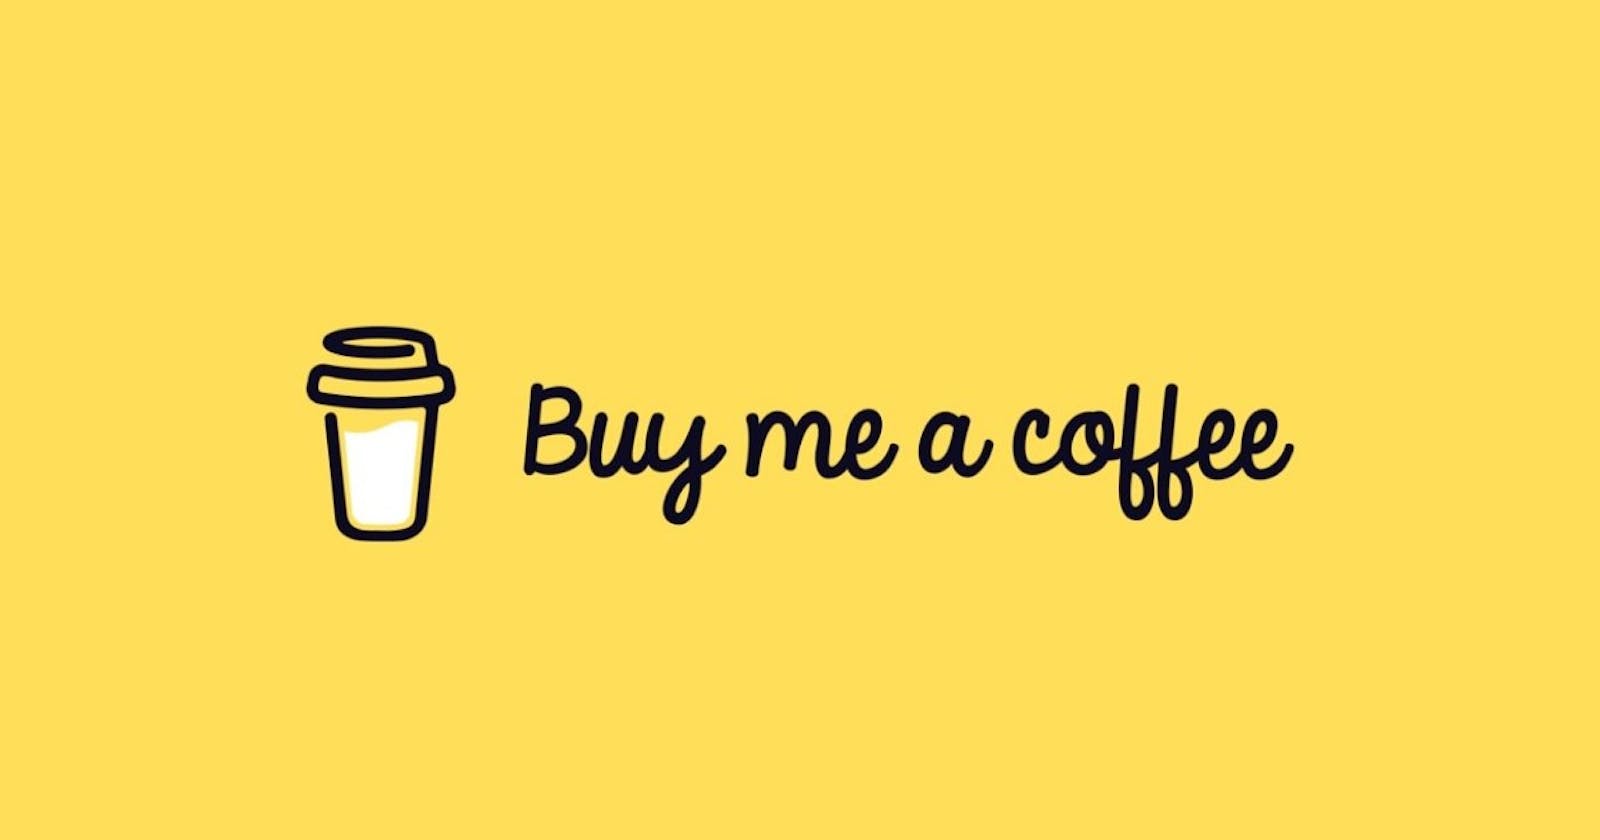 Buy Me a Coffee